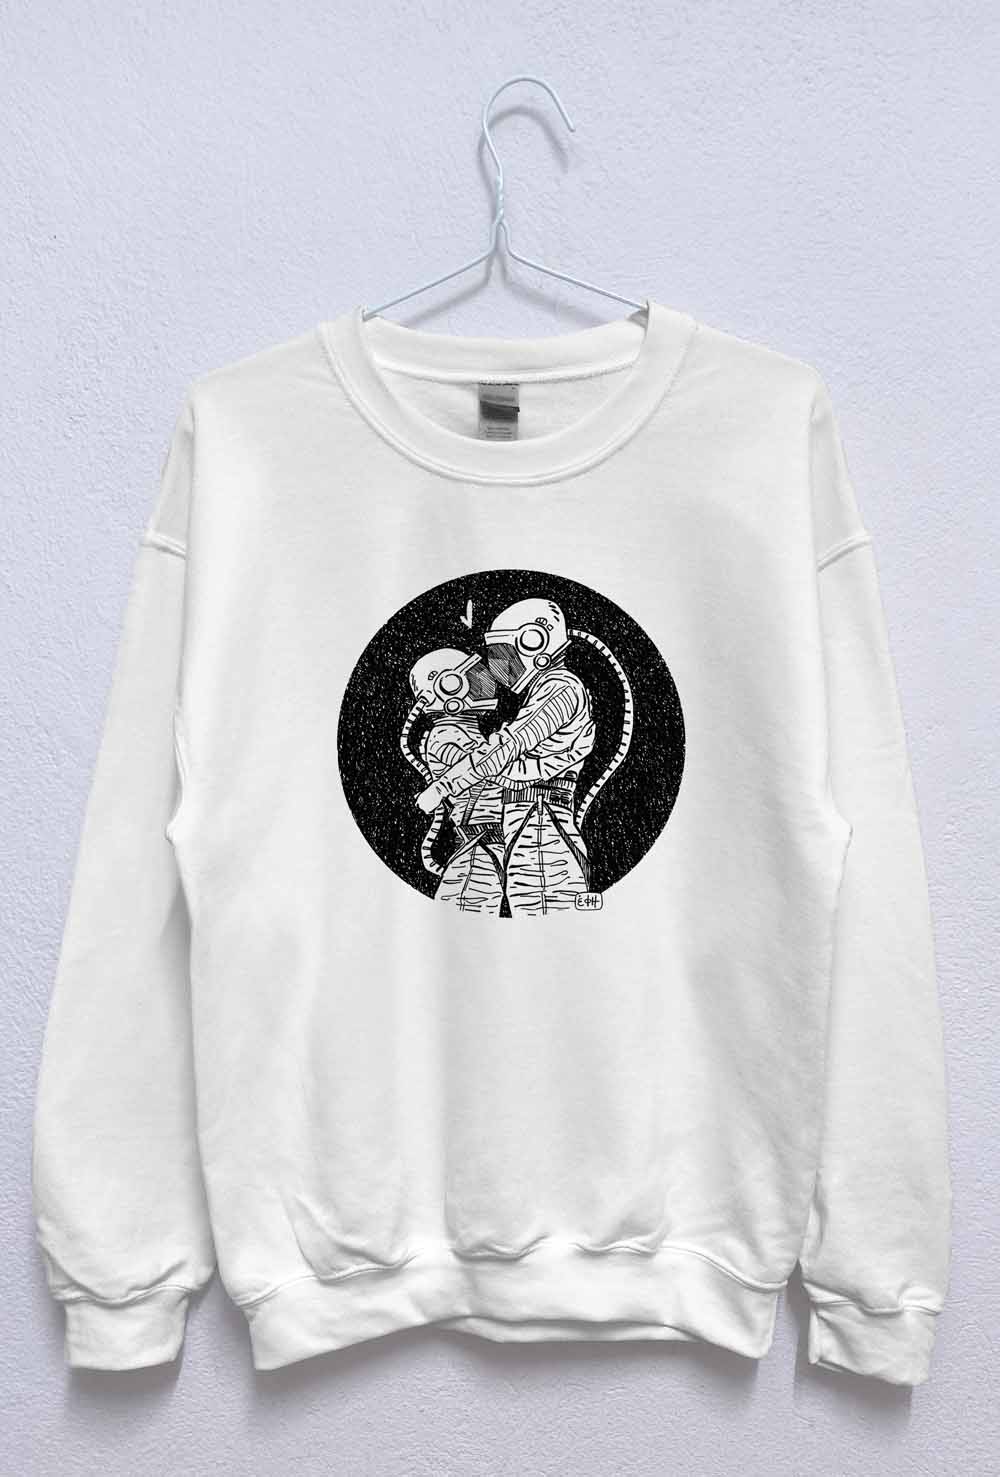 astro black white sweatshirt